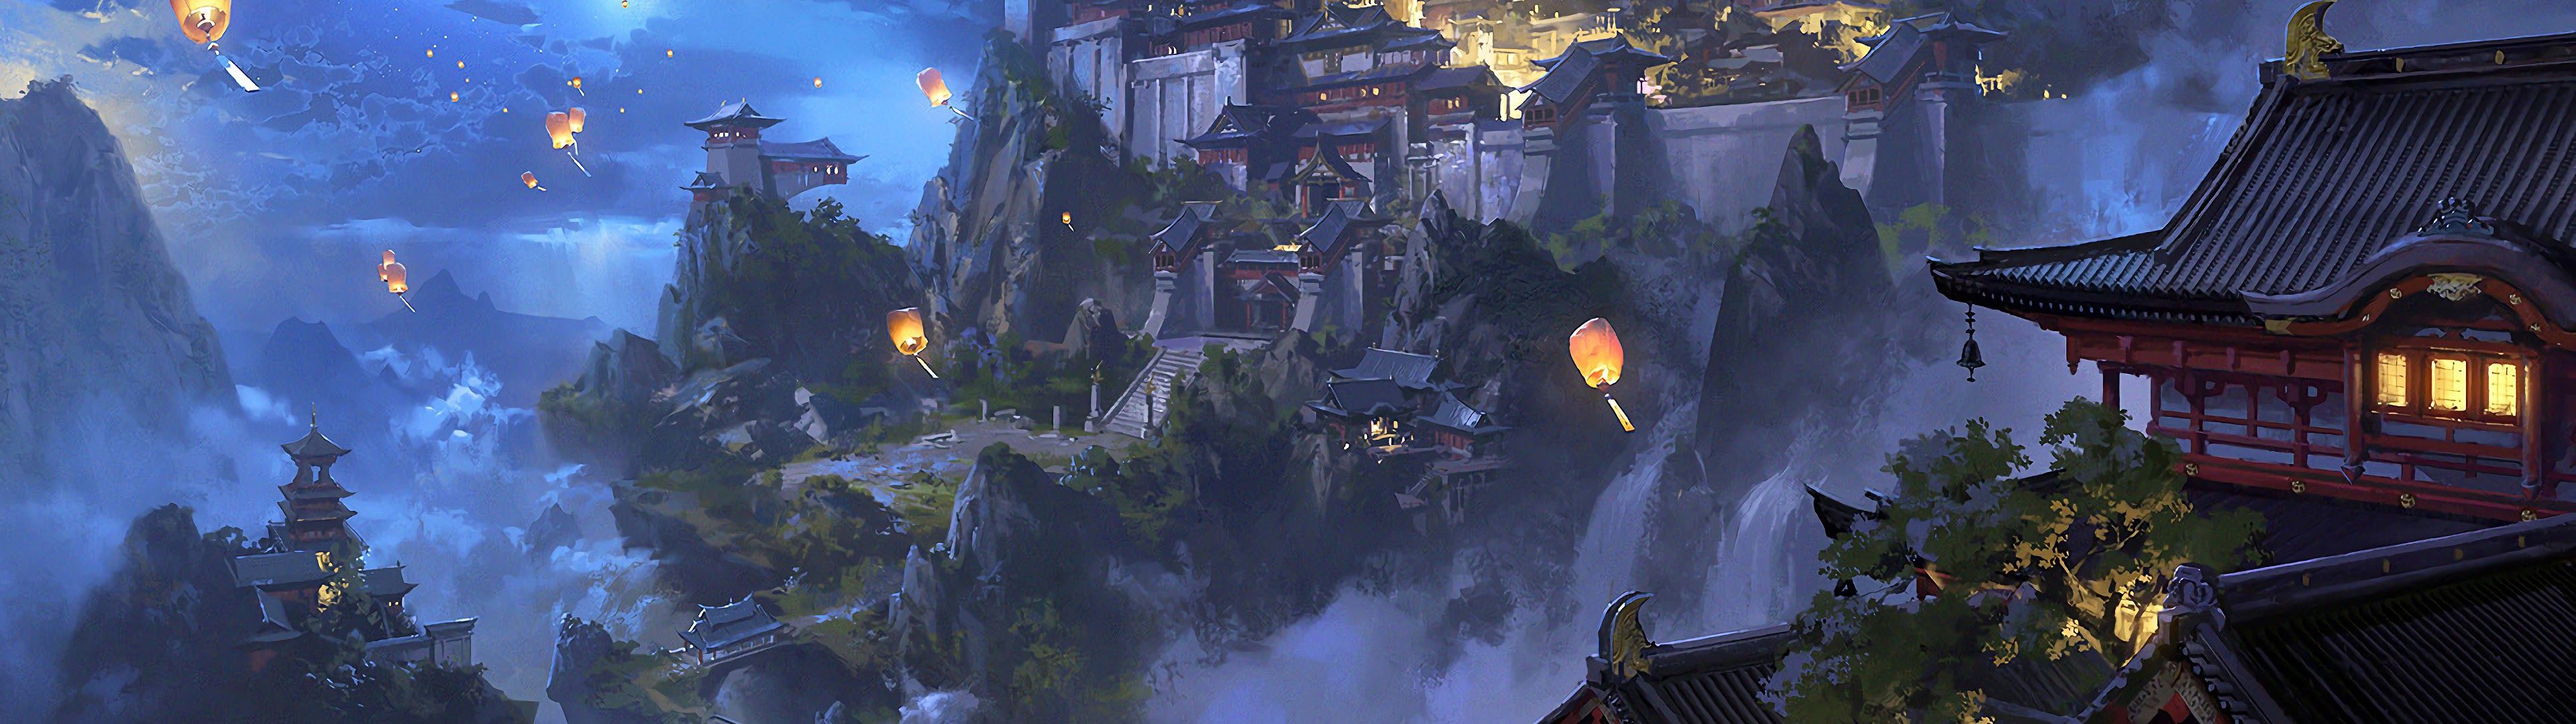 Anime Sky Lantern Mountain Japanese Castle Night Scenery 4K Wallpaper